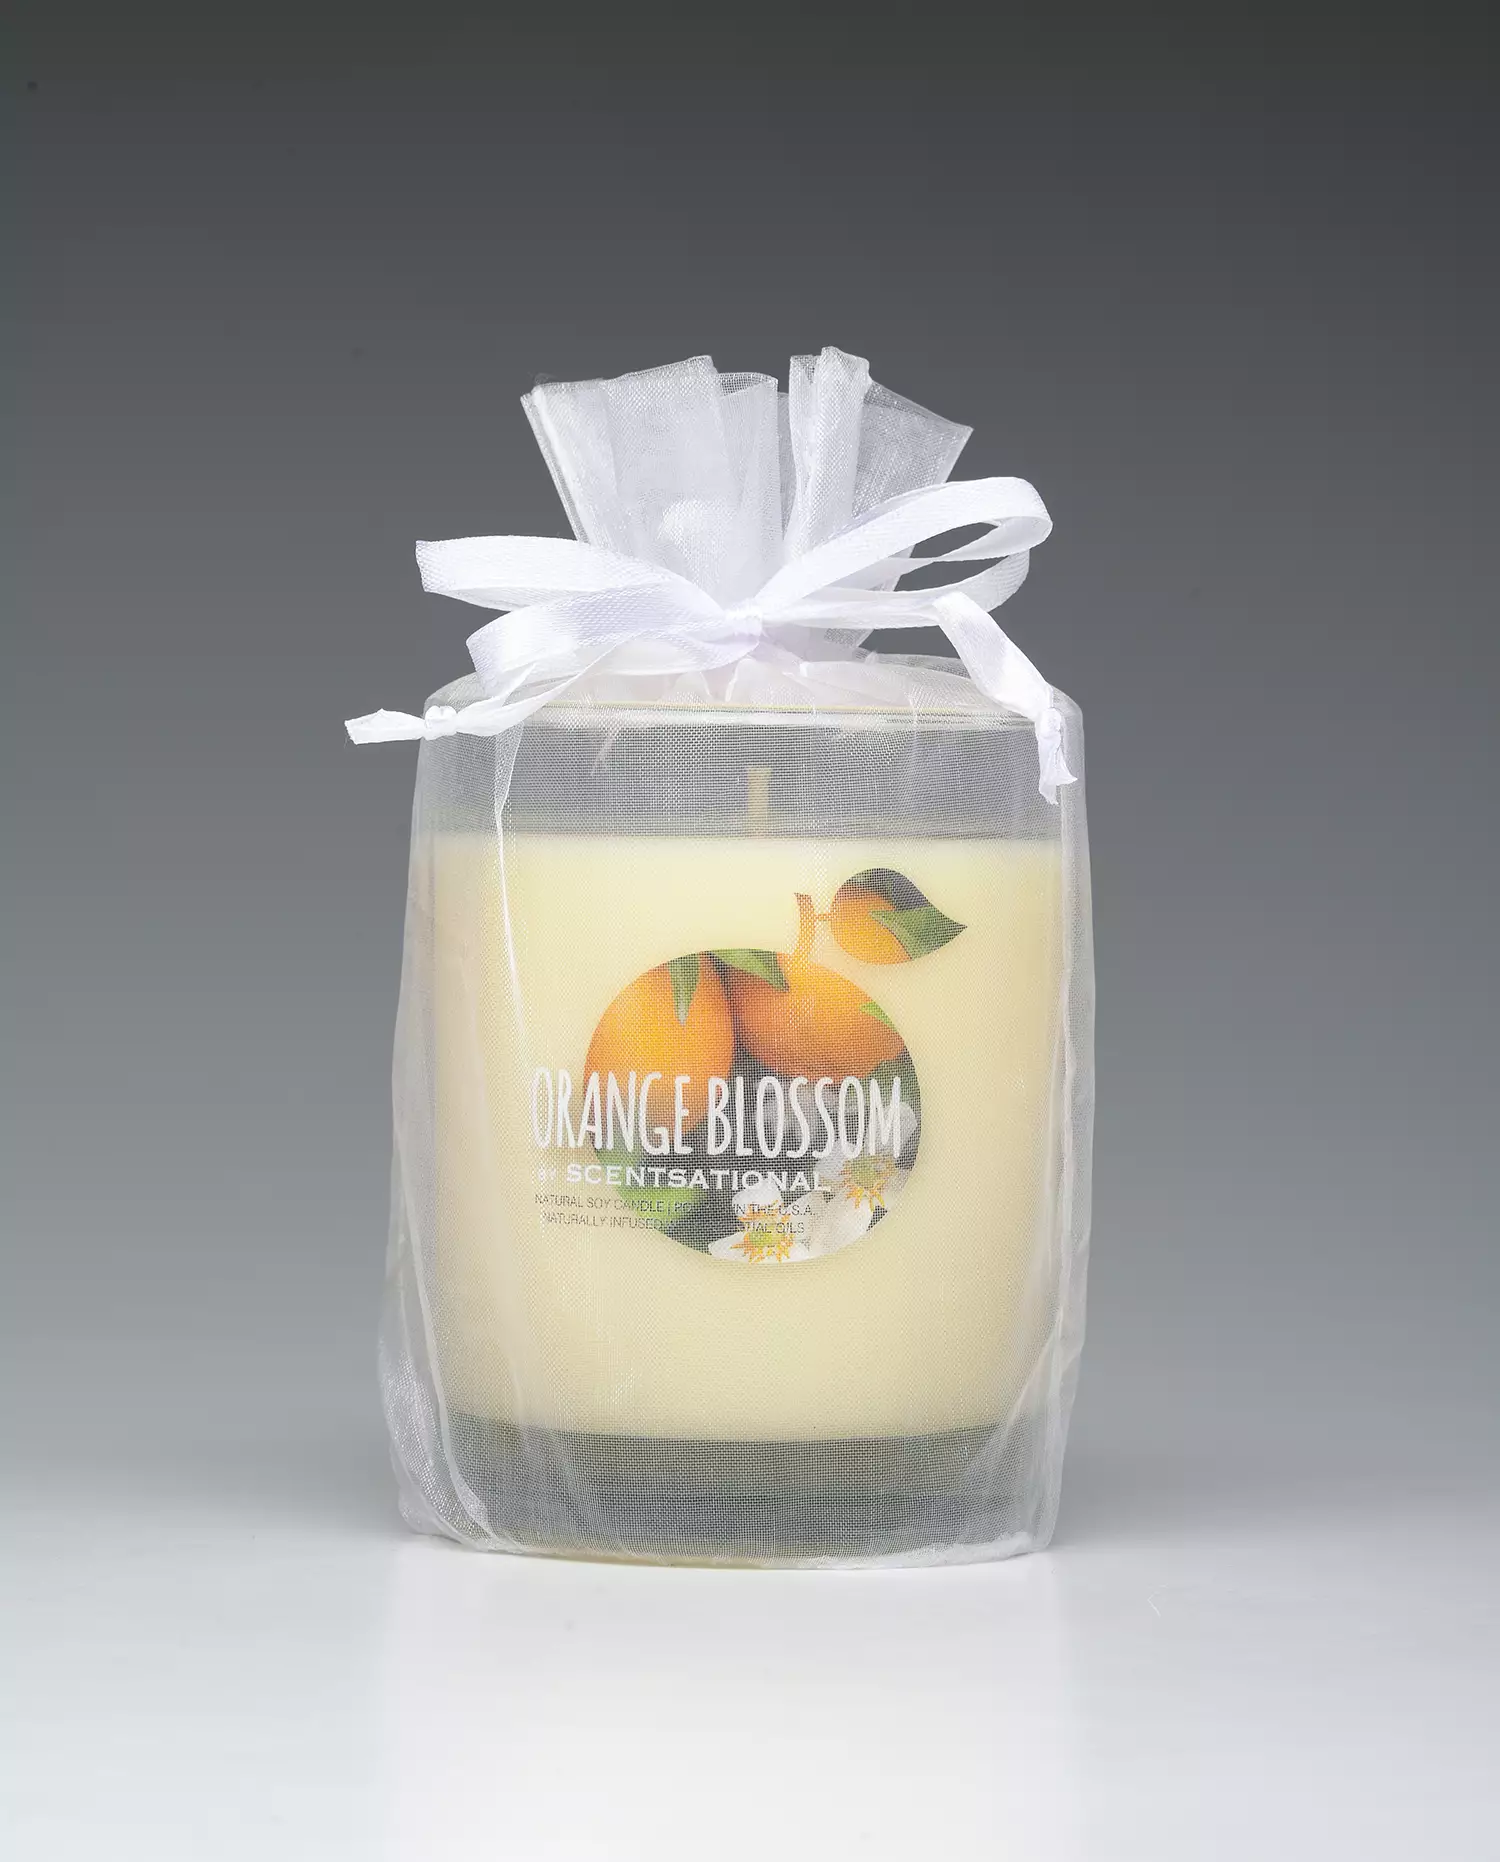 Village candle medium jar, Scentsational Flowers Ltd